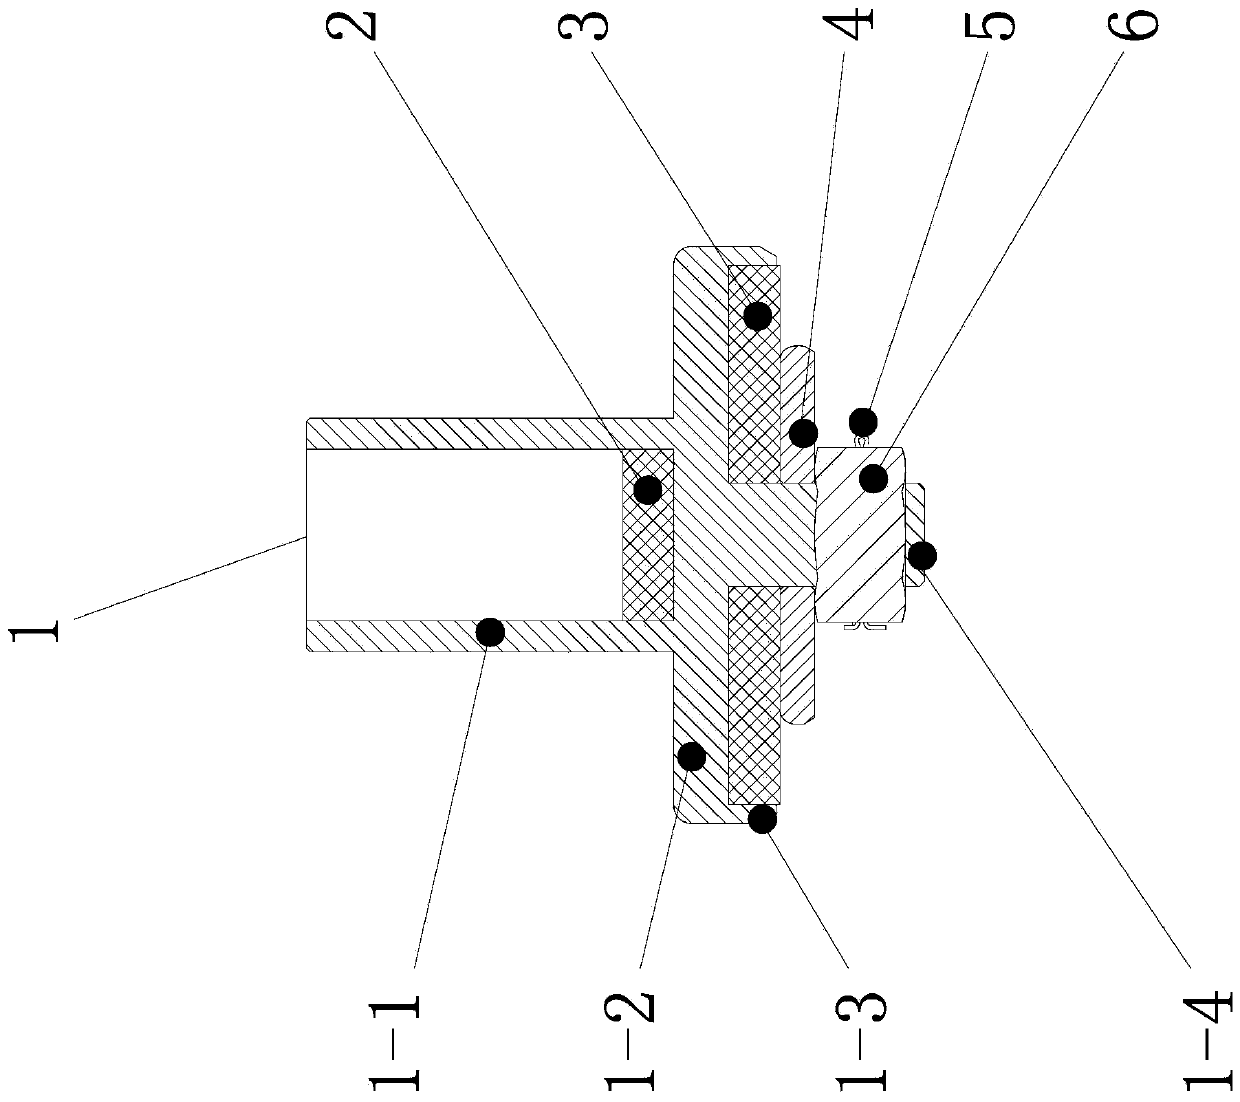 Valve element structure of one-way valve